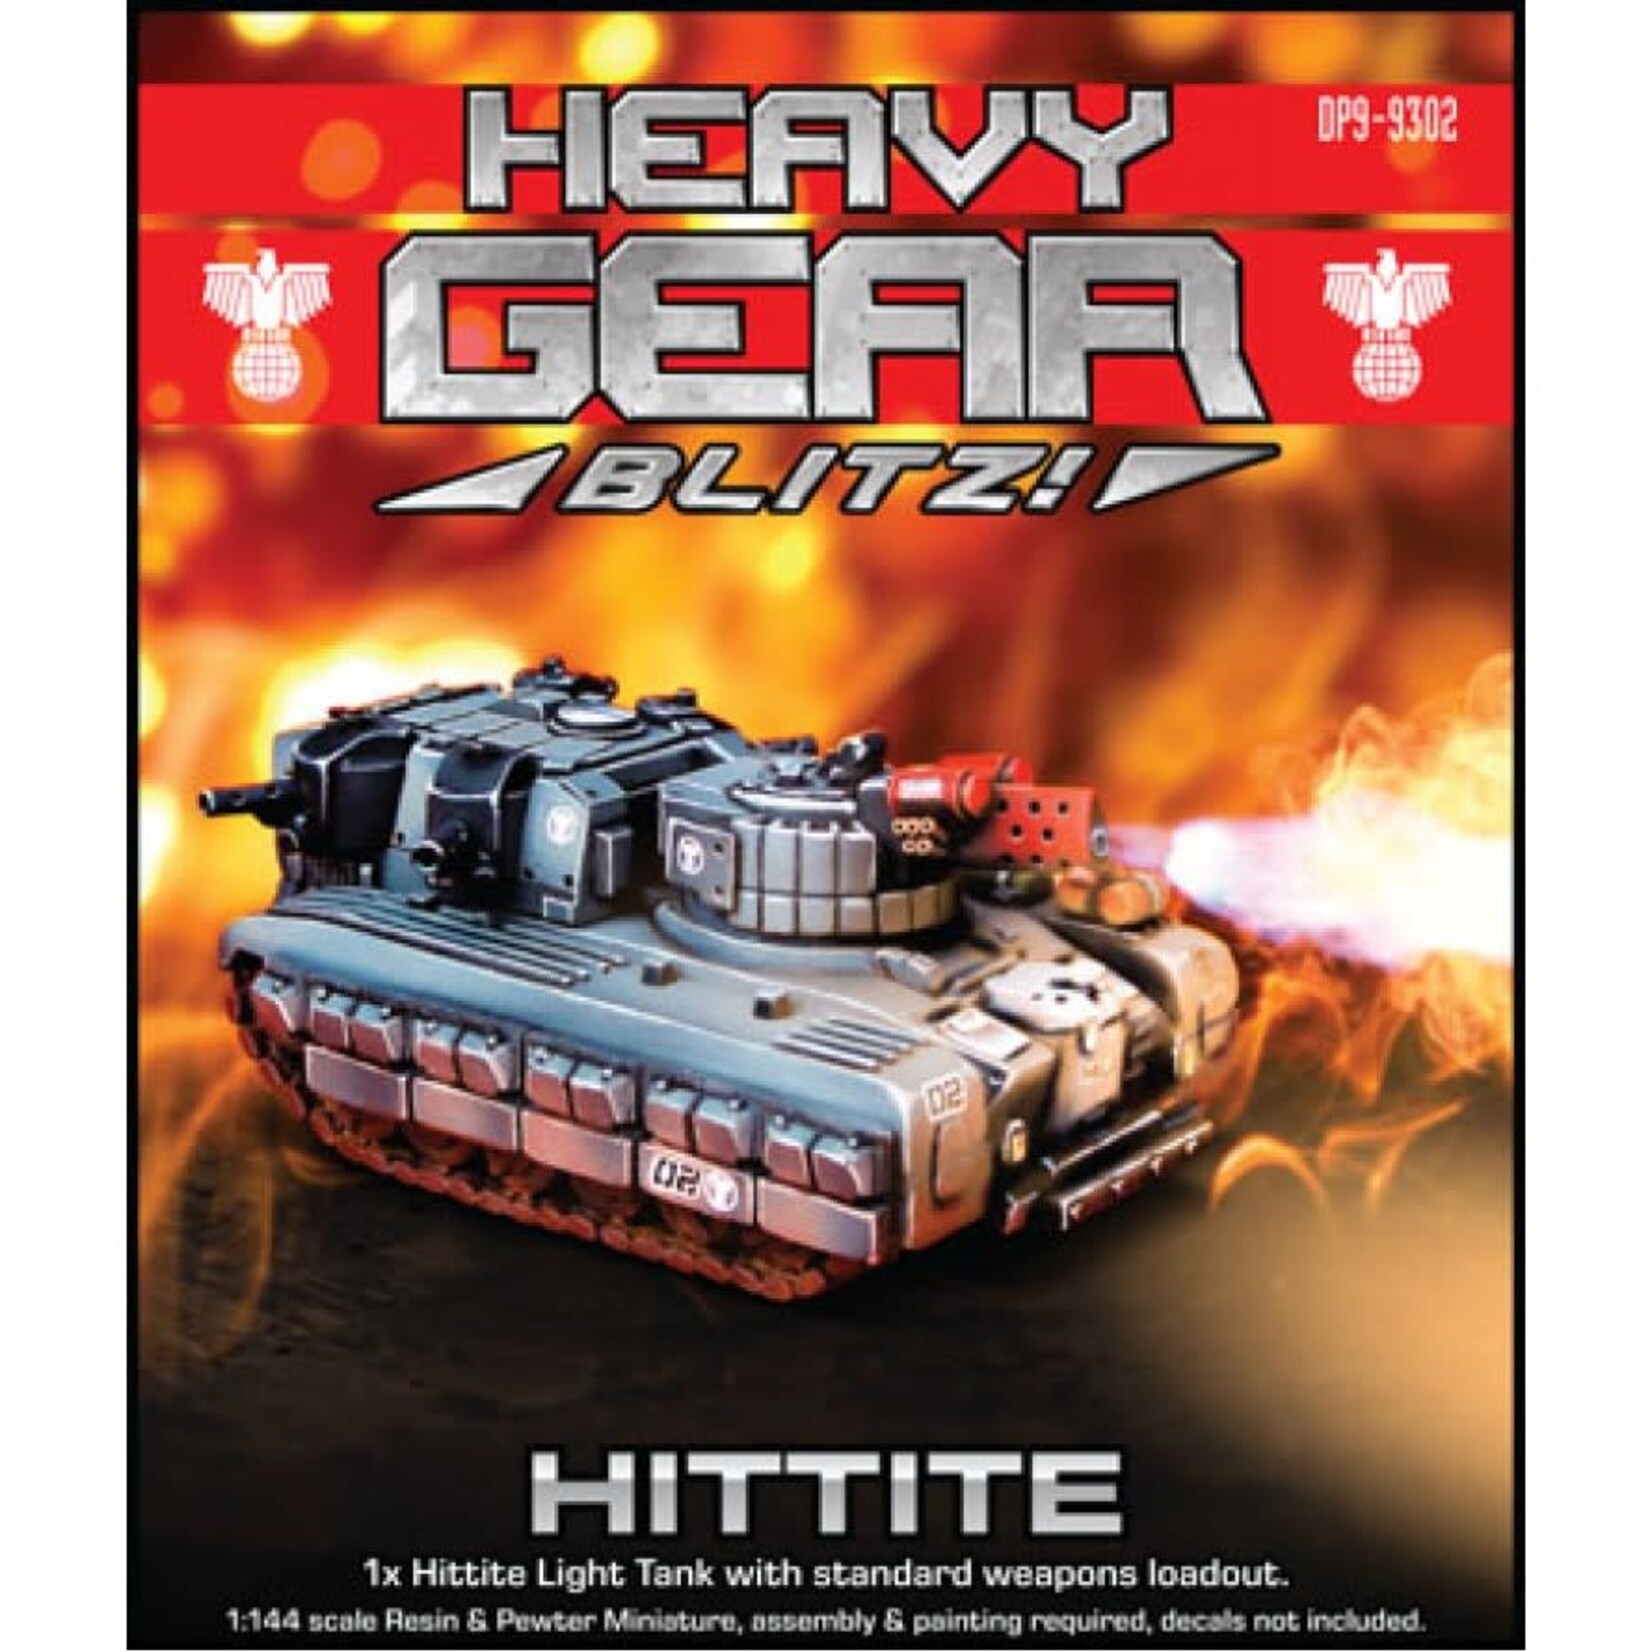 Dream Pod 9 Heavy Gear Blitz - Southern Hittite Light Tank